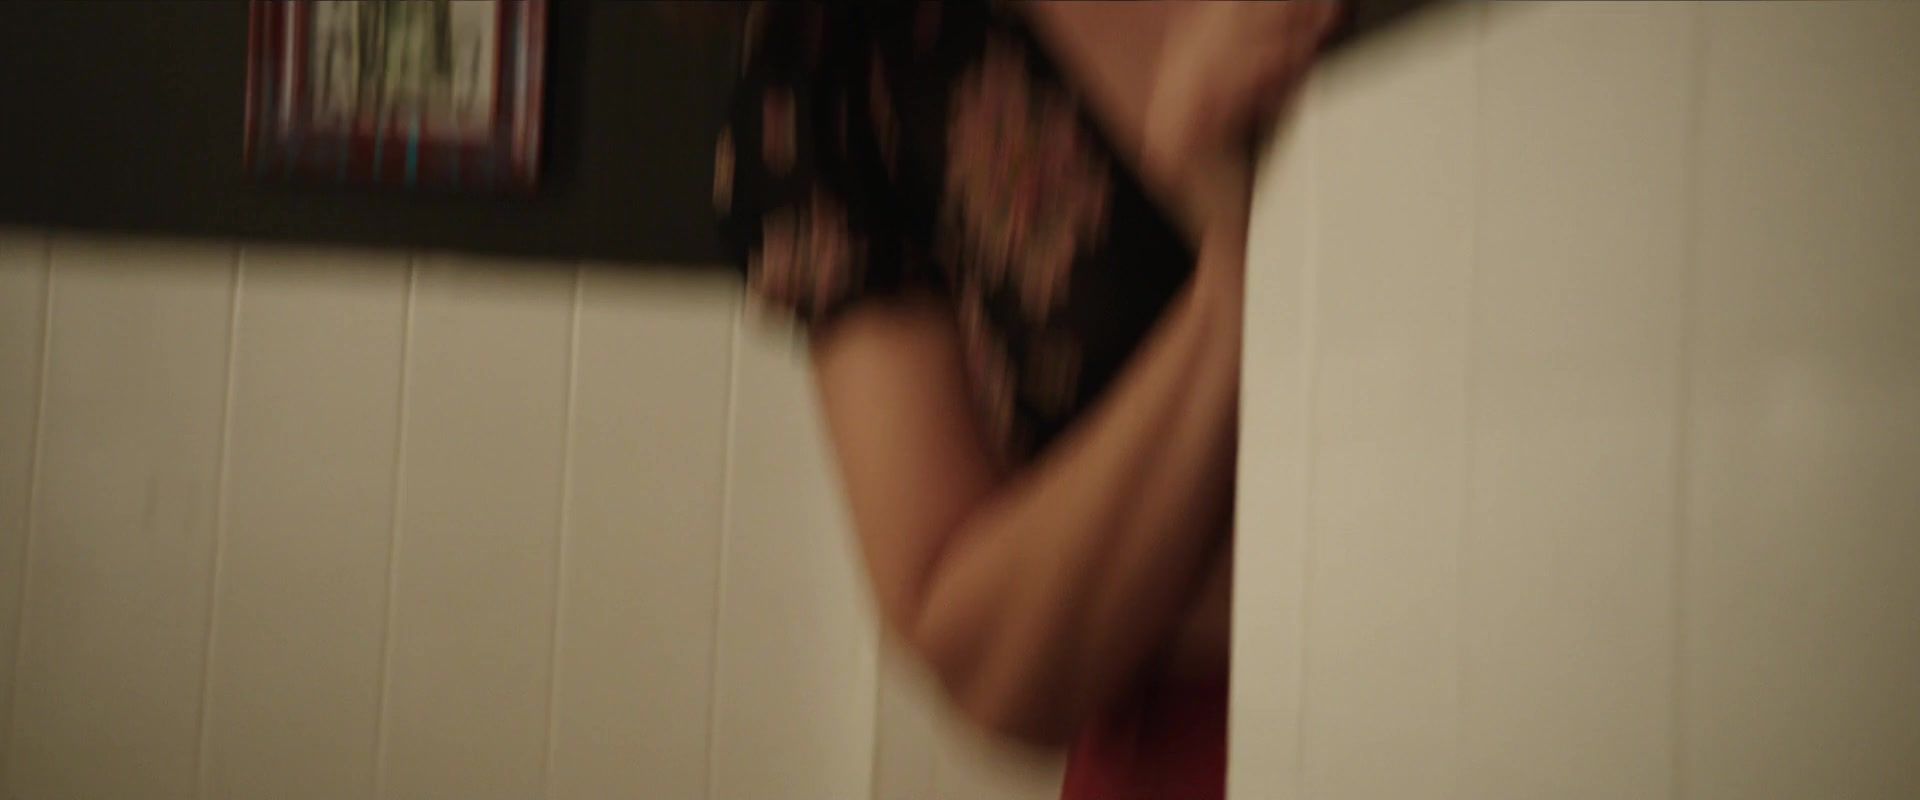 XVicious Nude Lina Esco of the movie "Free the Nipple" | Released in 2014 Pau Grande